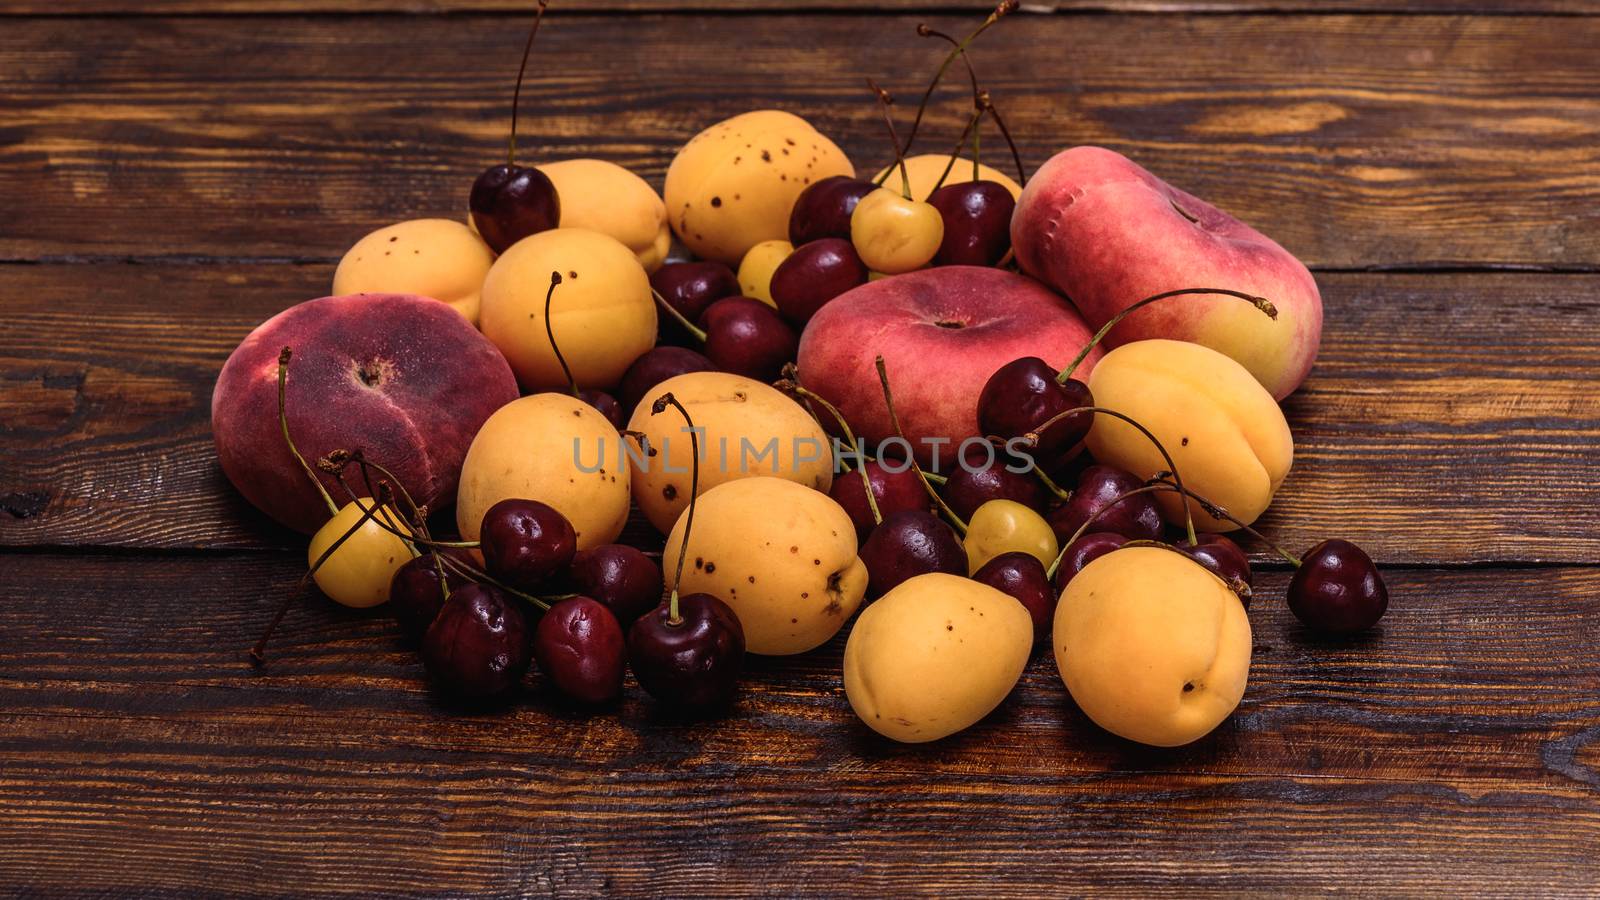 Fruits on dark wooden background by Seva_blsv